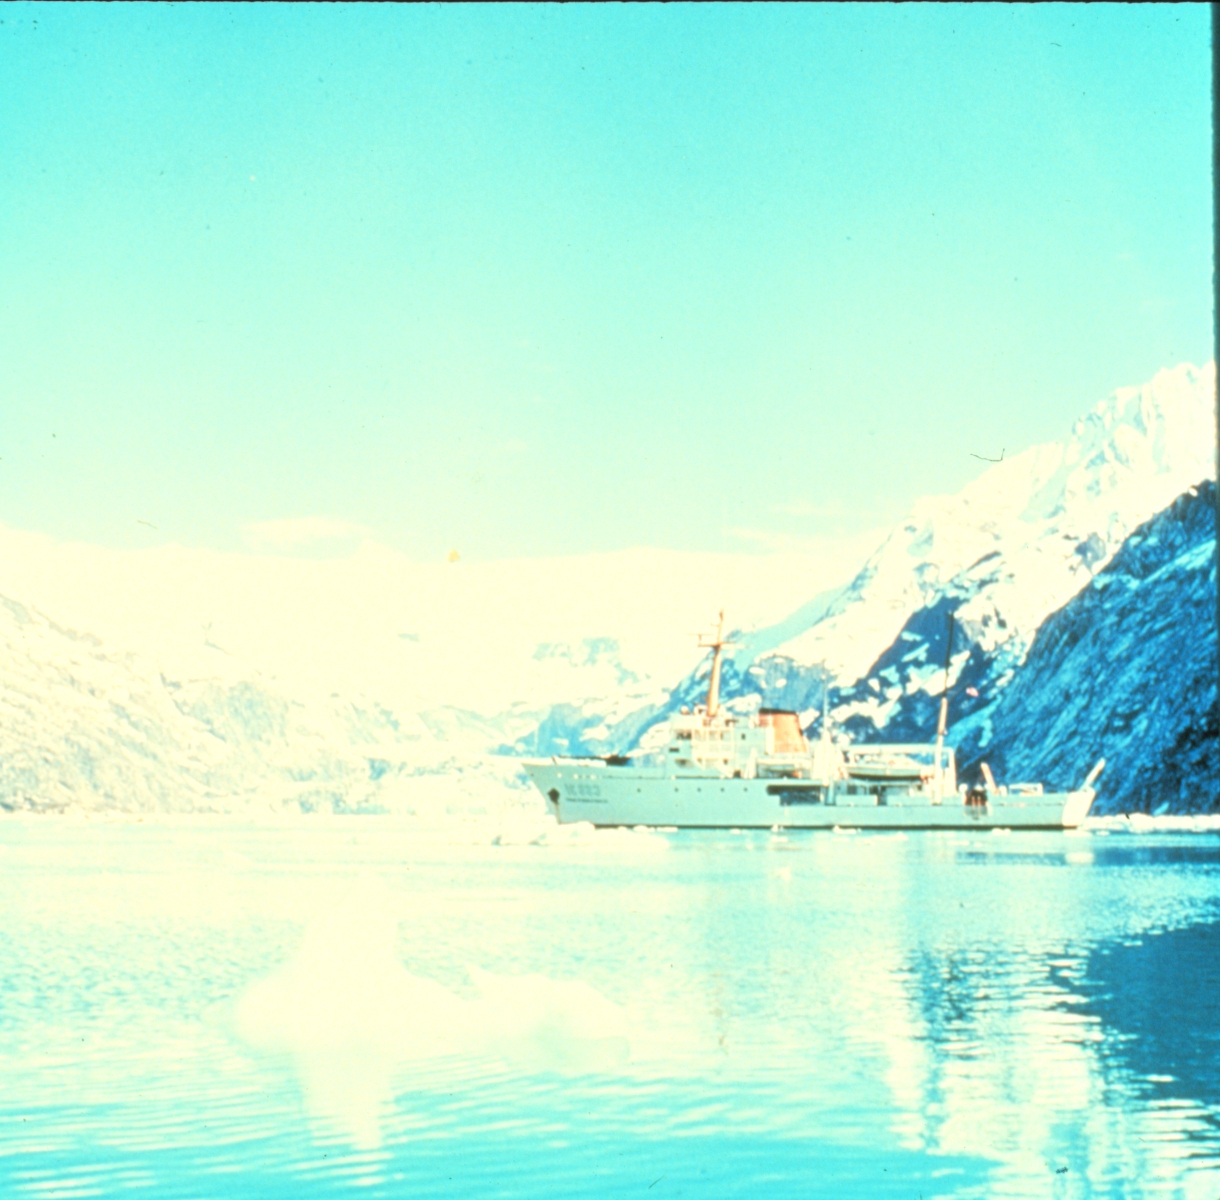 NOAA Ship DAVIDSON